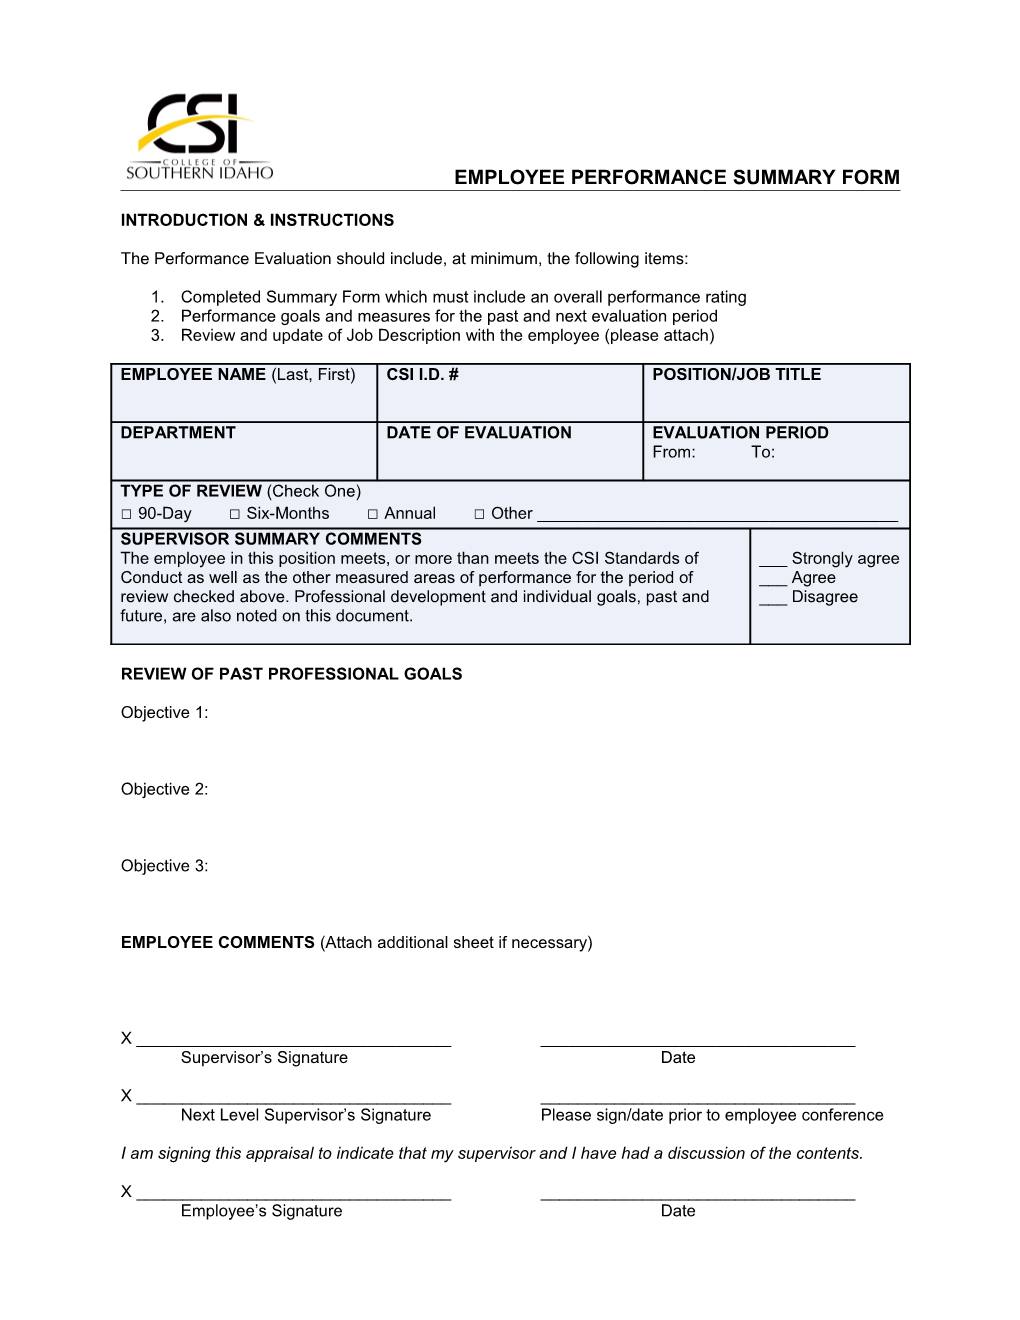 Employee Performance Summary Form